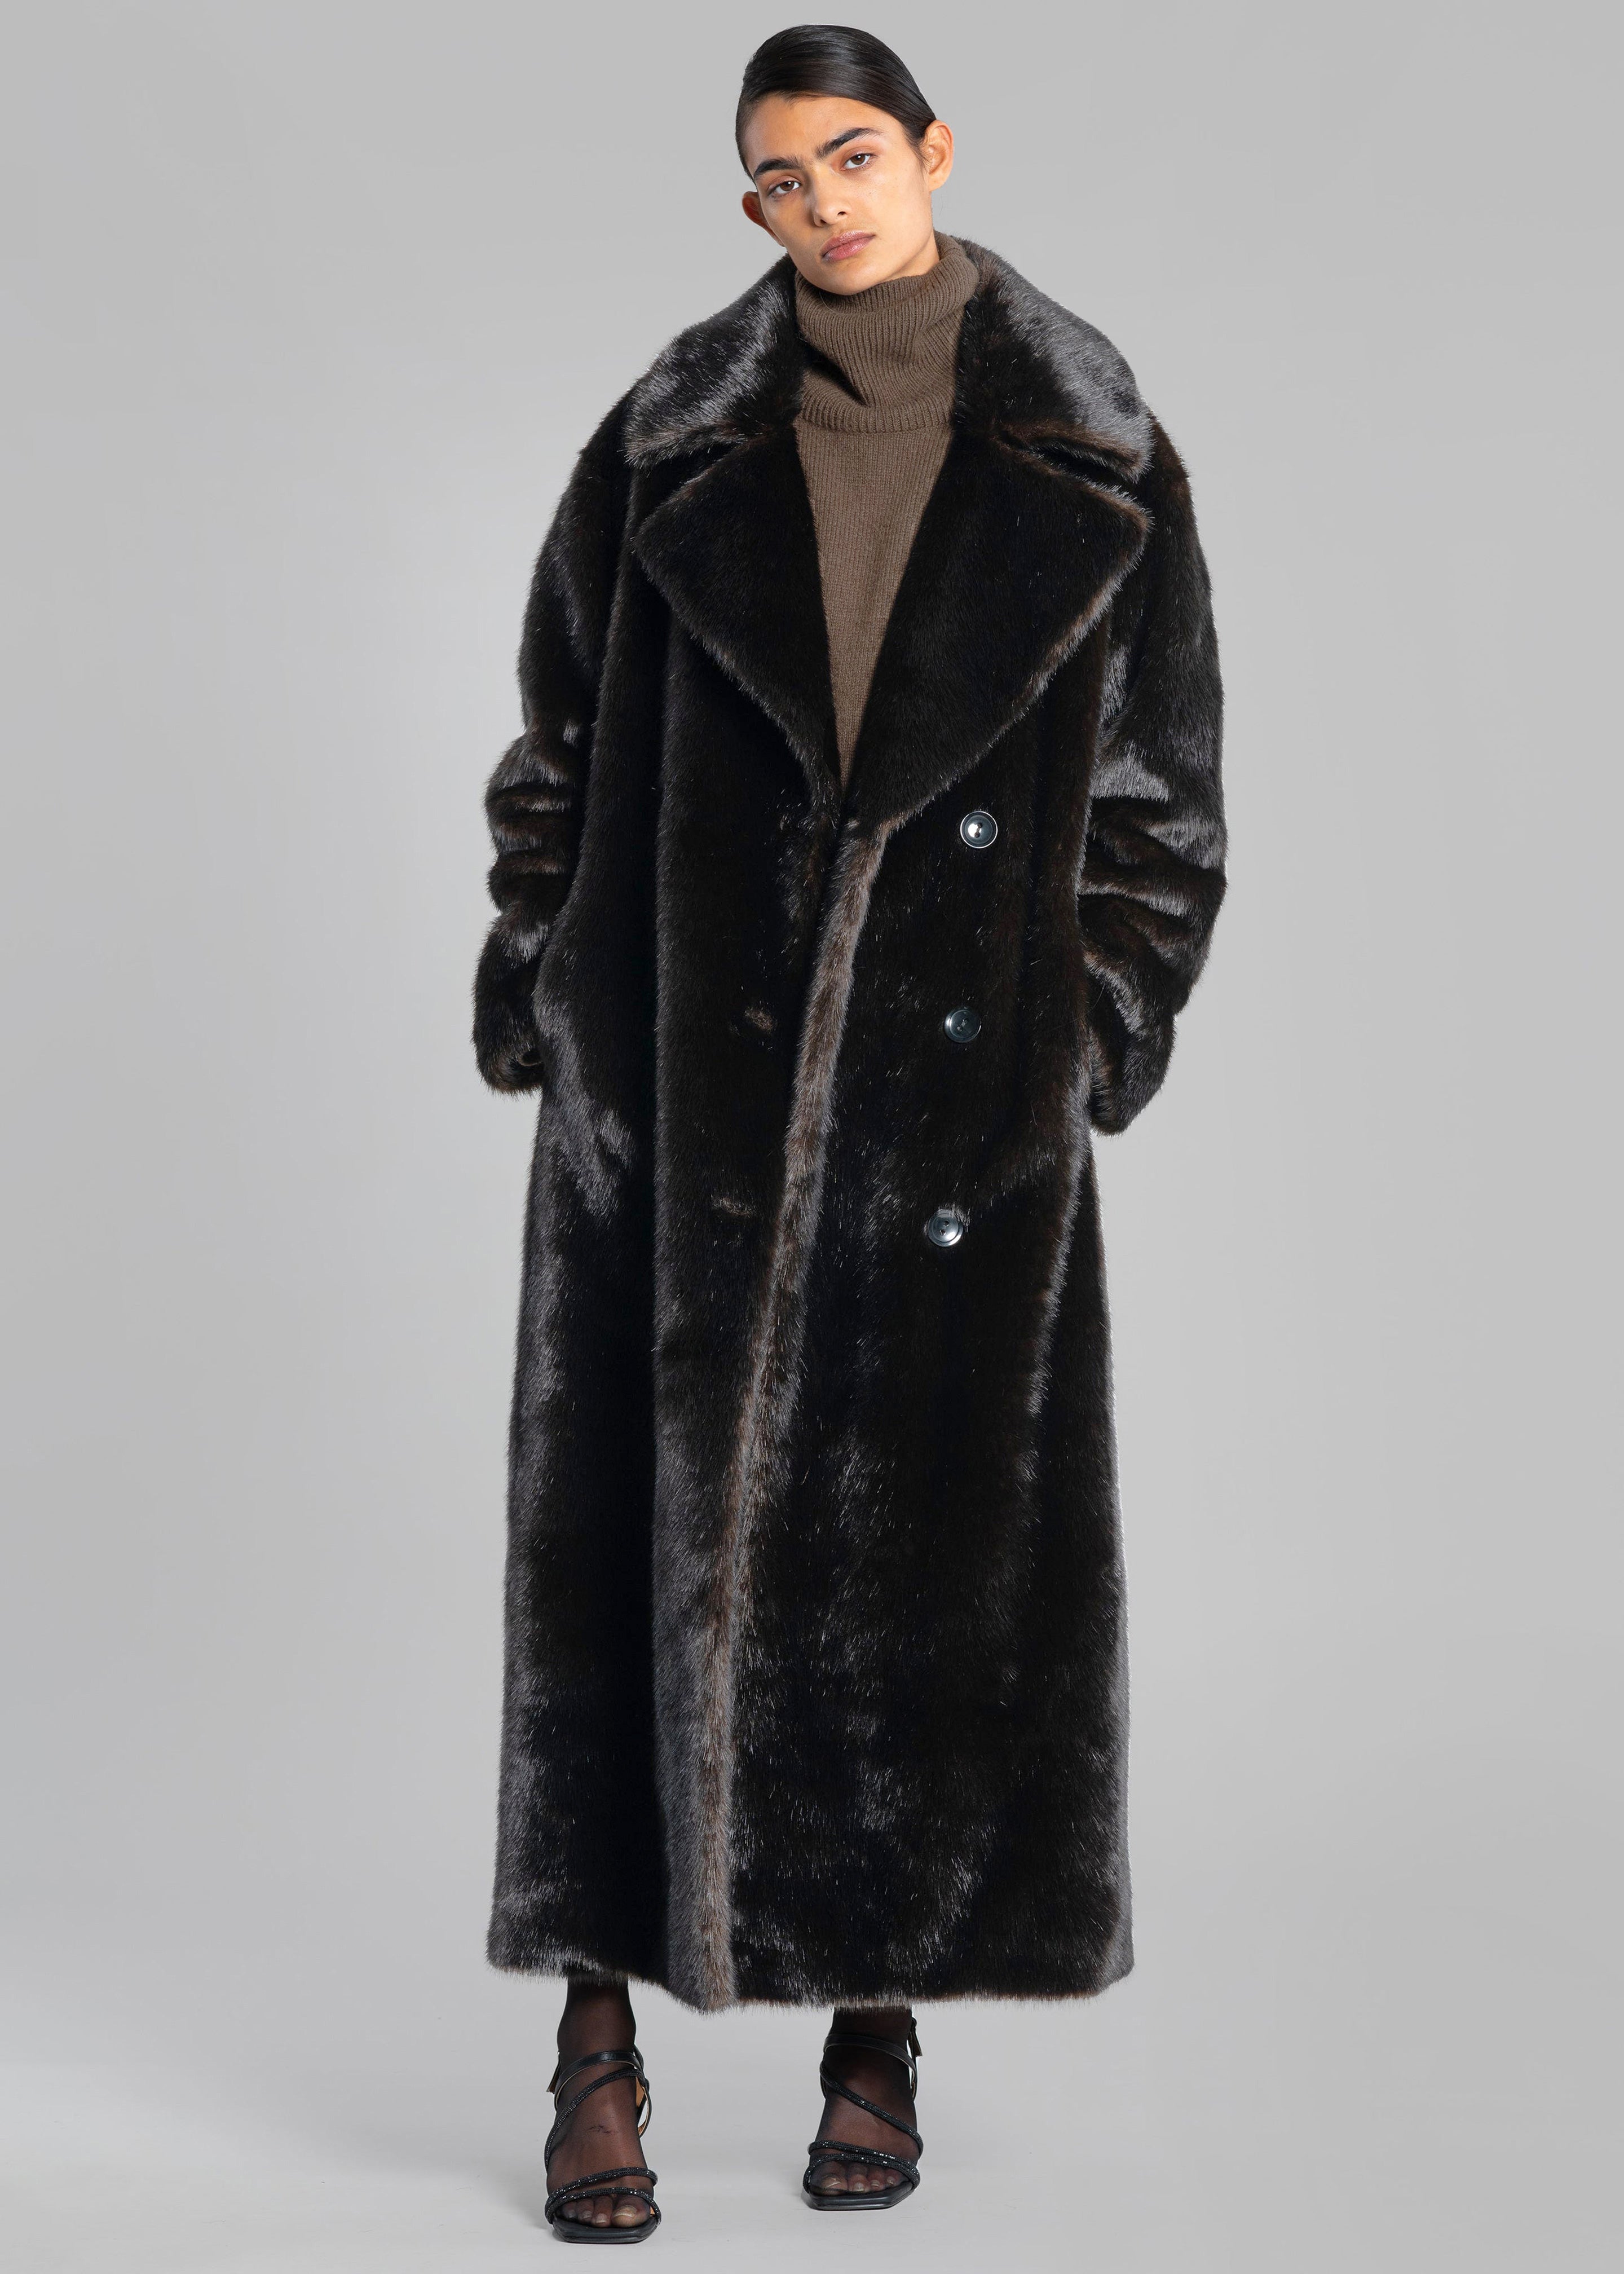 The Frankie Shop Joni Faux Fur Coat